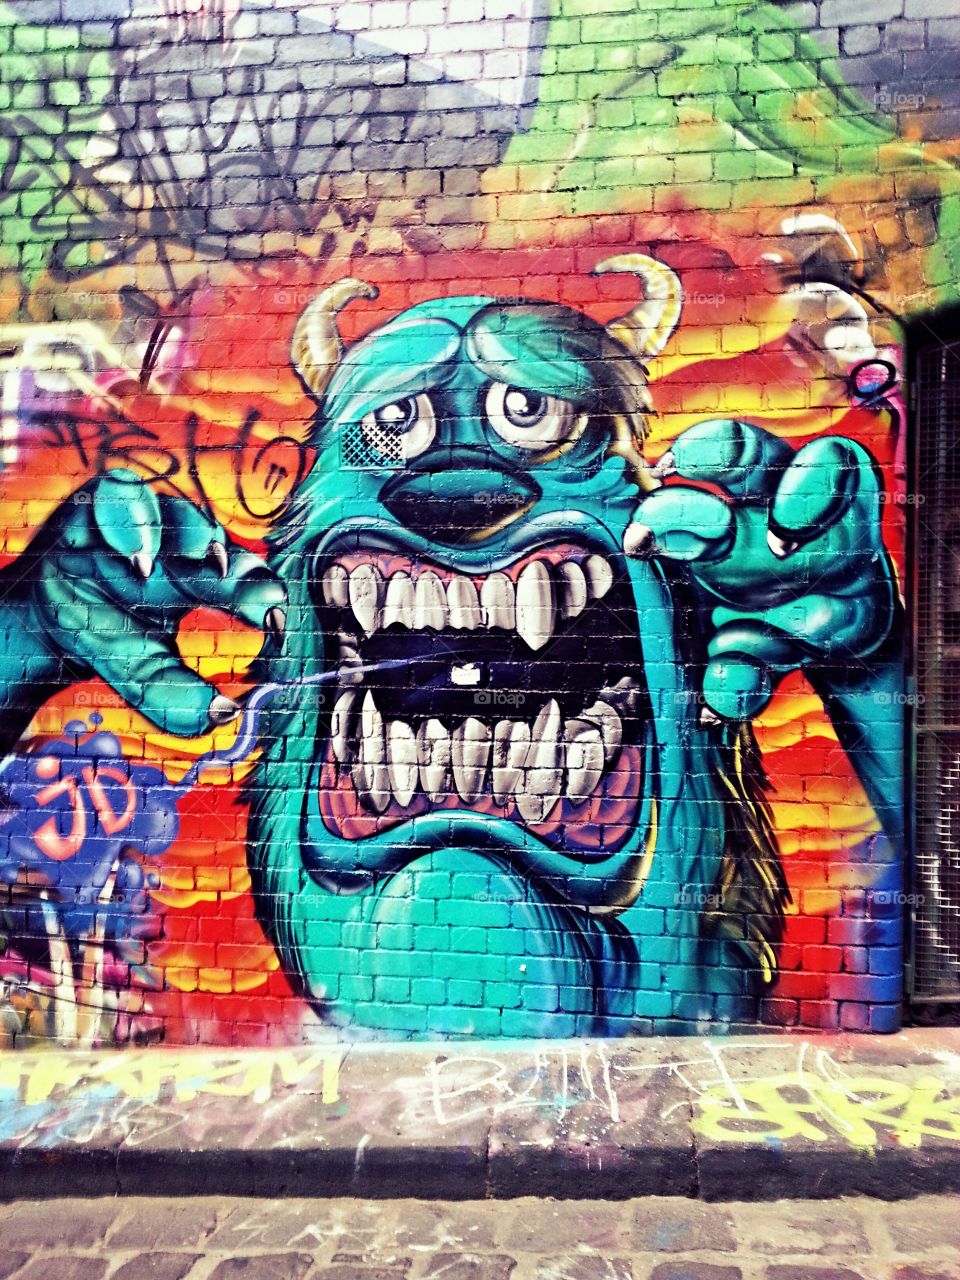 Disney Graffiti. As a huge Disney fan, I almost peed my pants... Melbourne graffiti art.